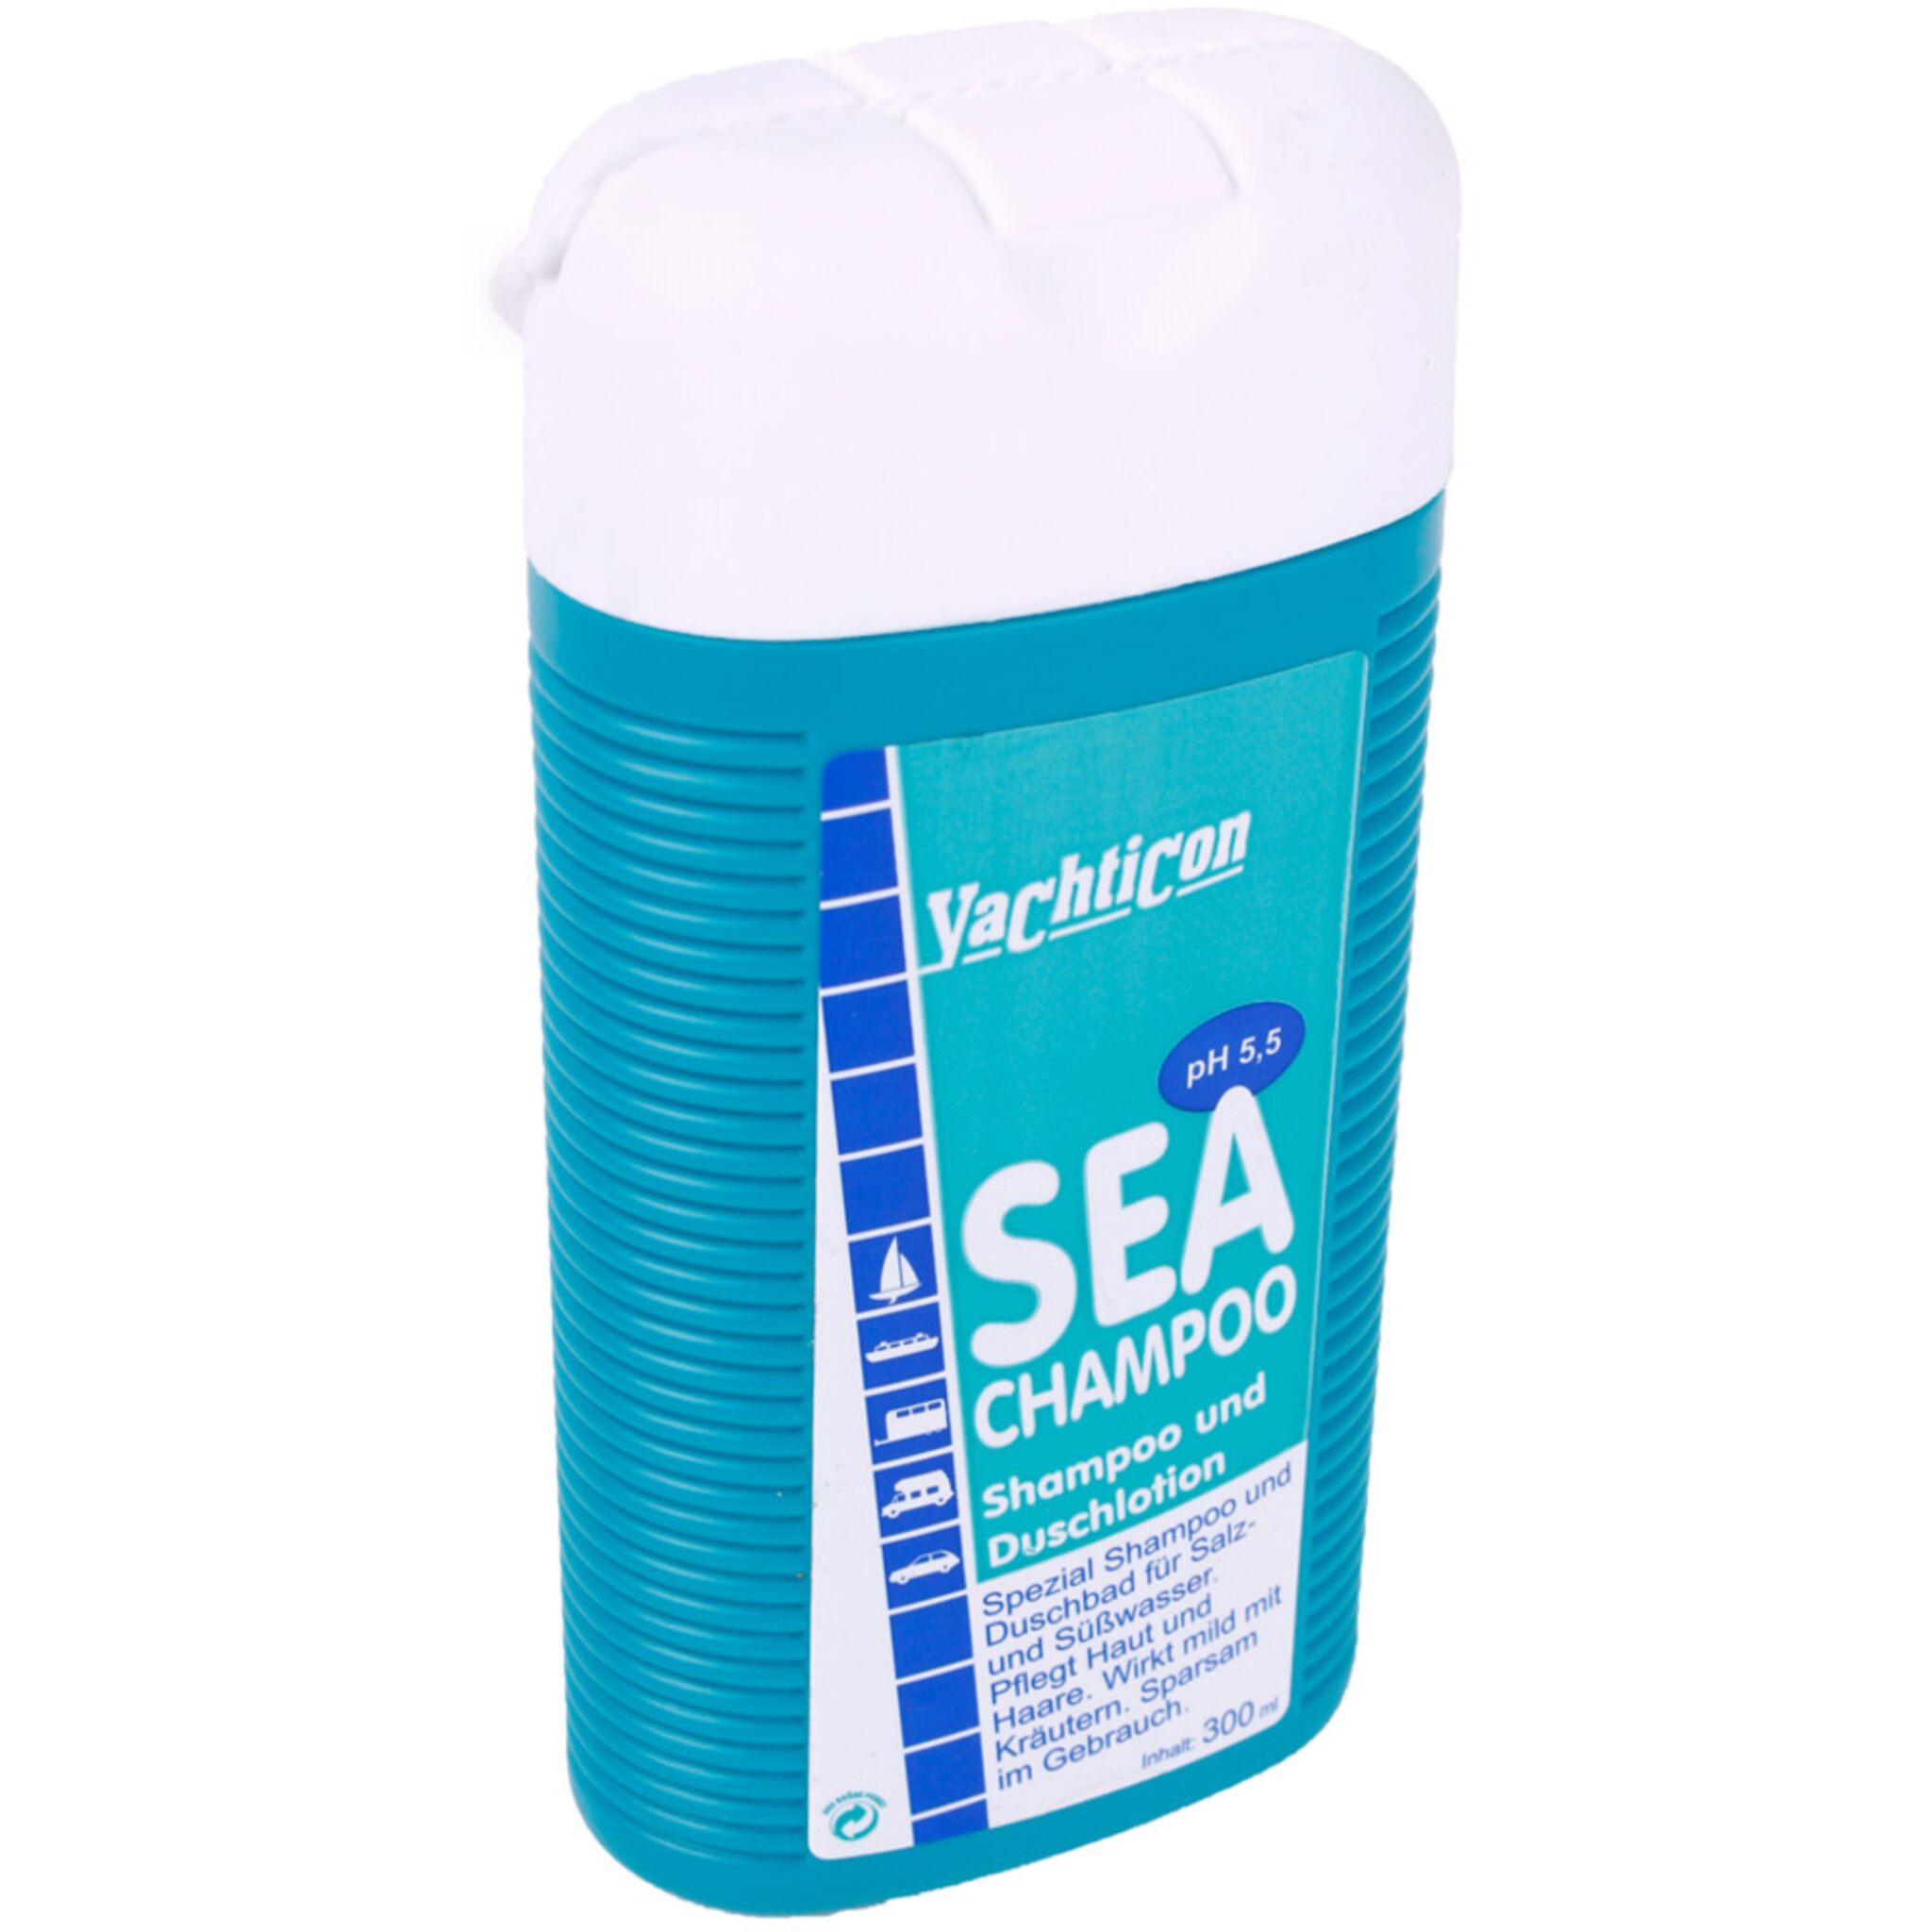 Yachticon SeaChampoo Shampoo and Shower Lotion